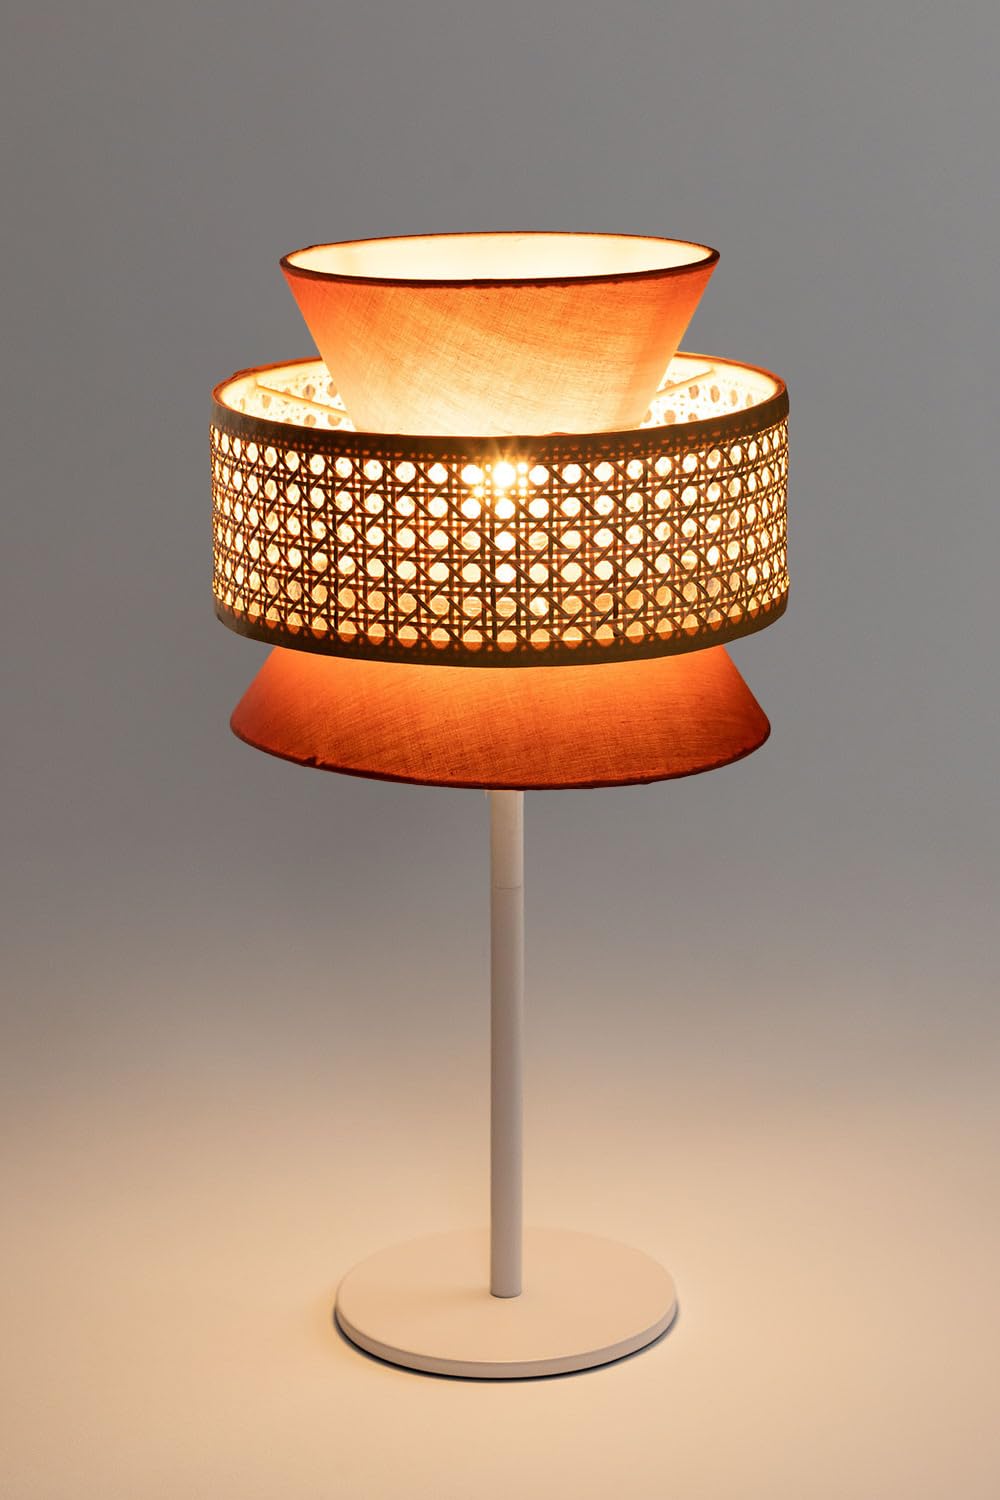 AKWAY Handmade Wicker Table Lamp, Beside Table Lamps, Study Table Lamps, Side Lamps Light Decoration for Home, Living Room, Bedroom Bedside, Hall (Orange) (Bulb not Included) - Akway